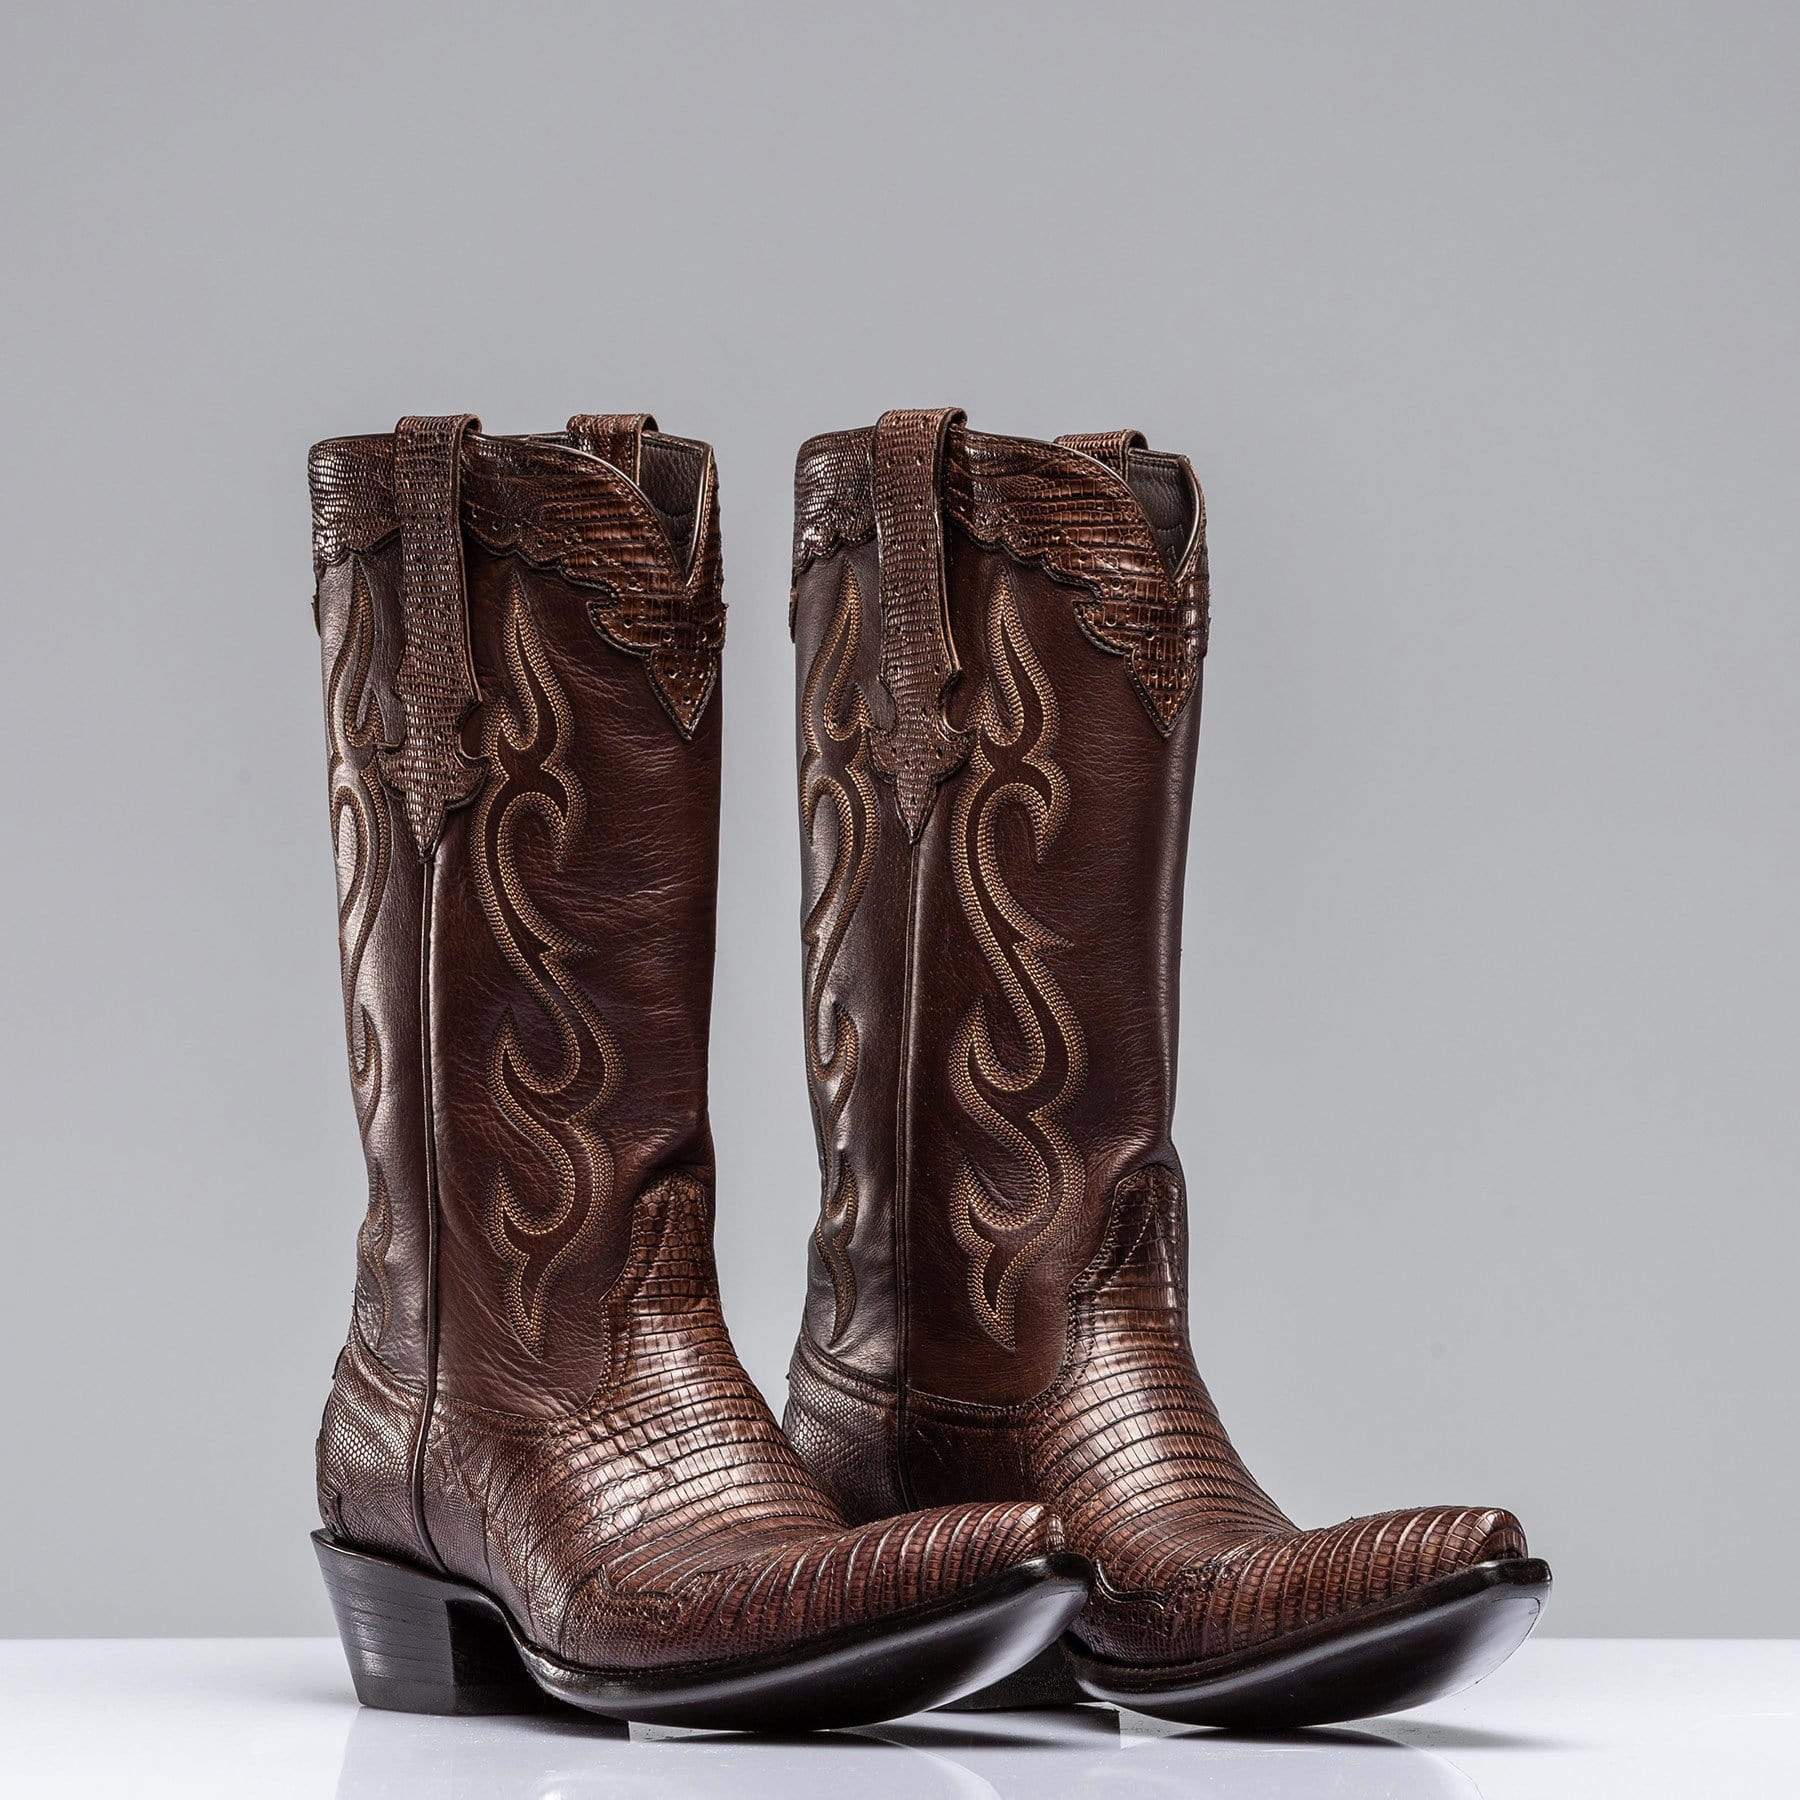 Teju Lizard Cowboy Boots - AXEL'S